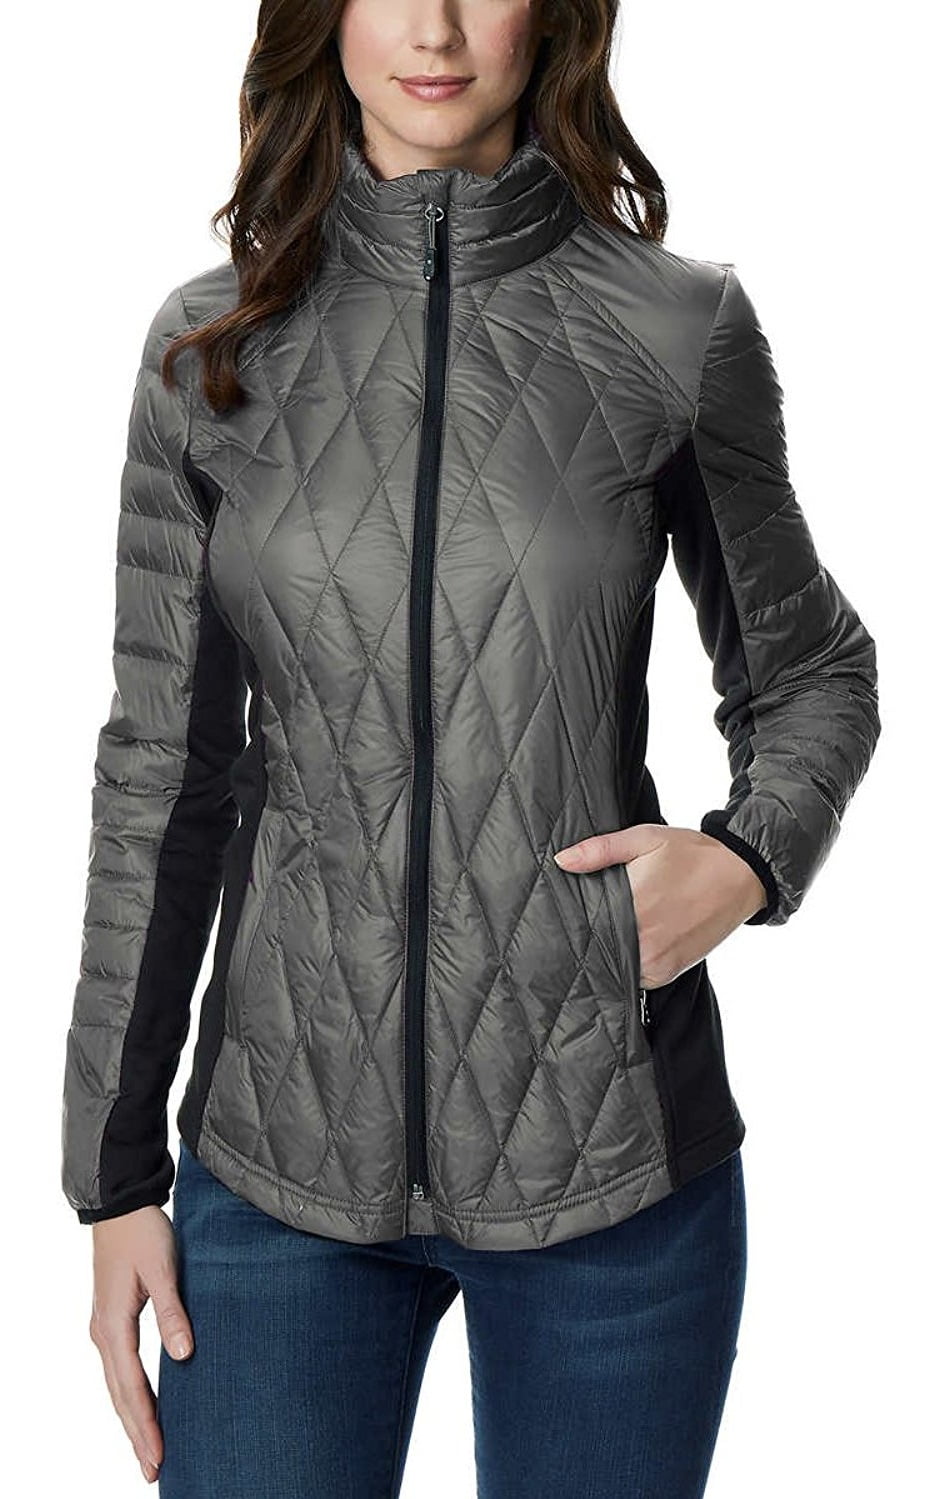 32° DEGREES Womens Ultra-Light Down Packable Jacket